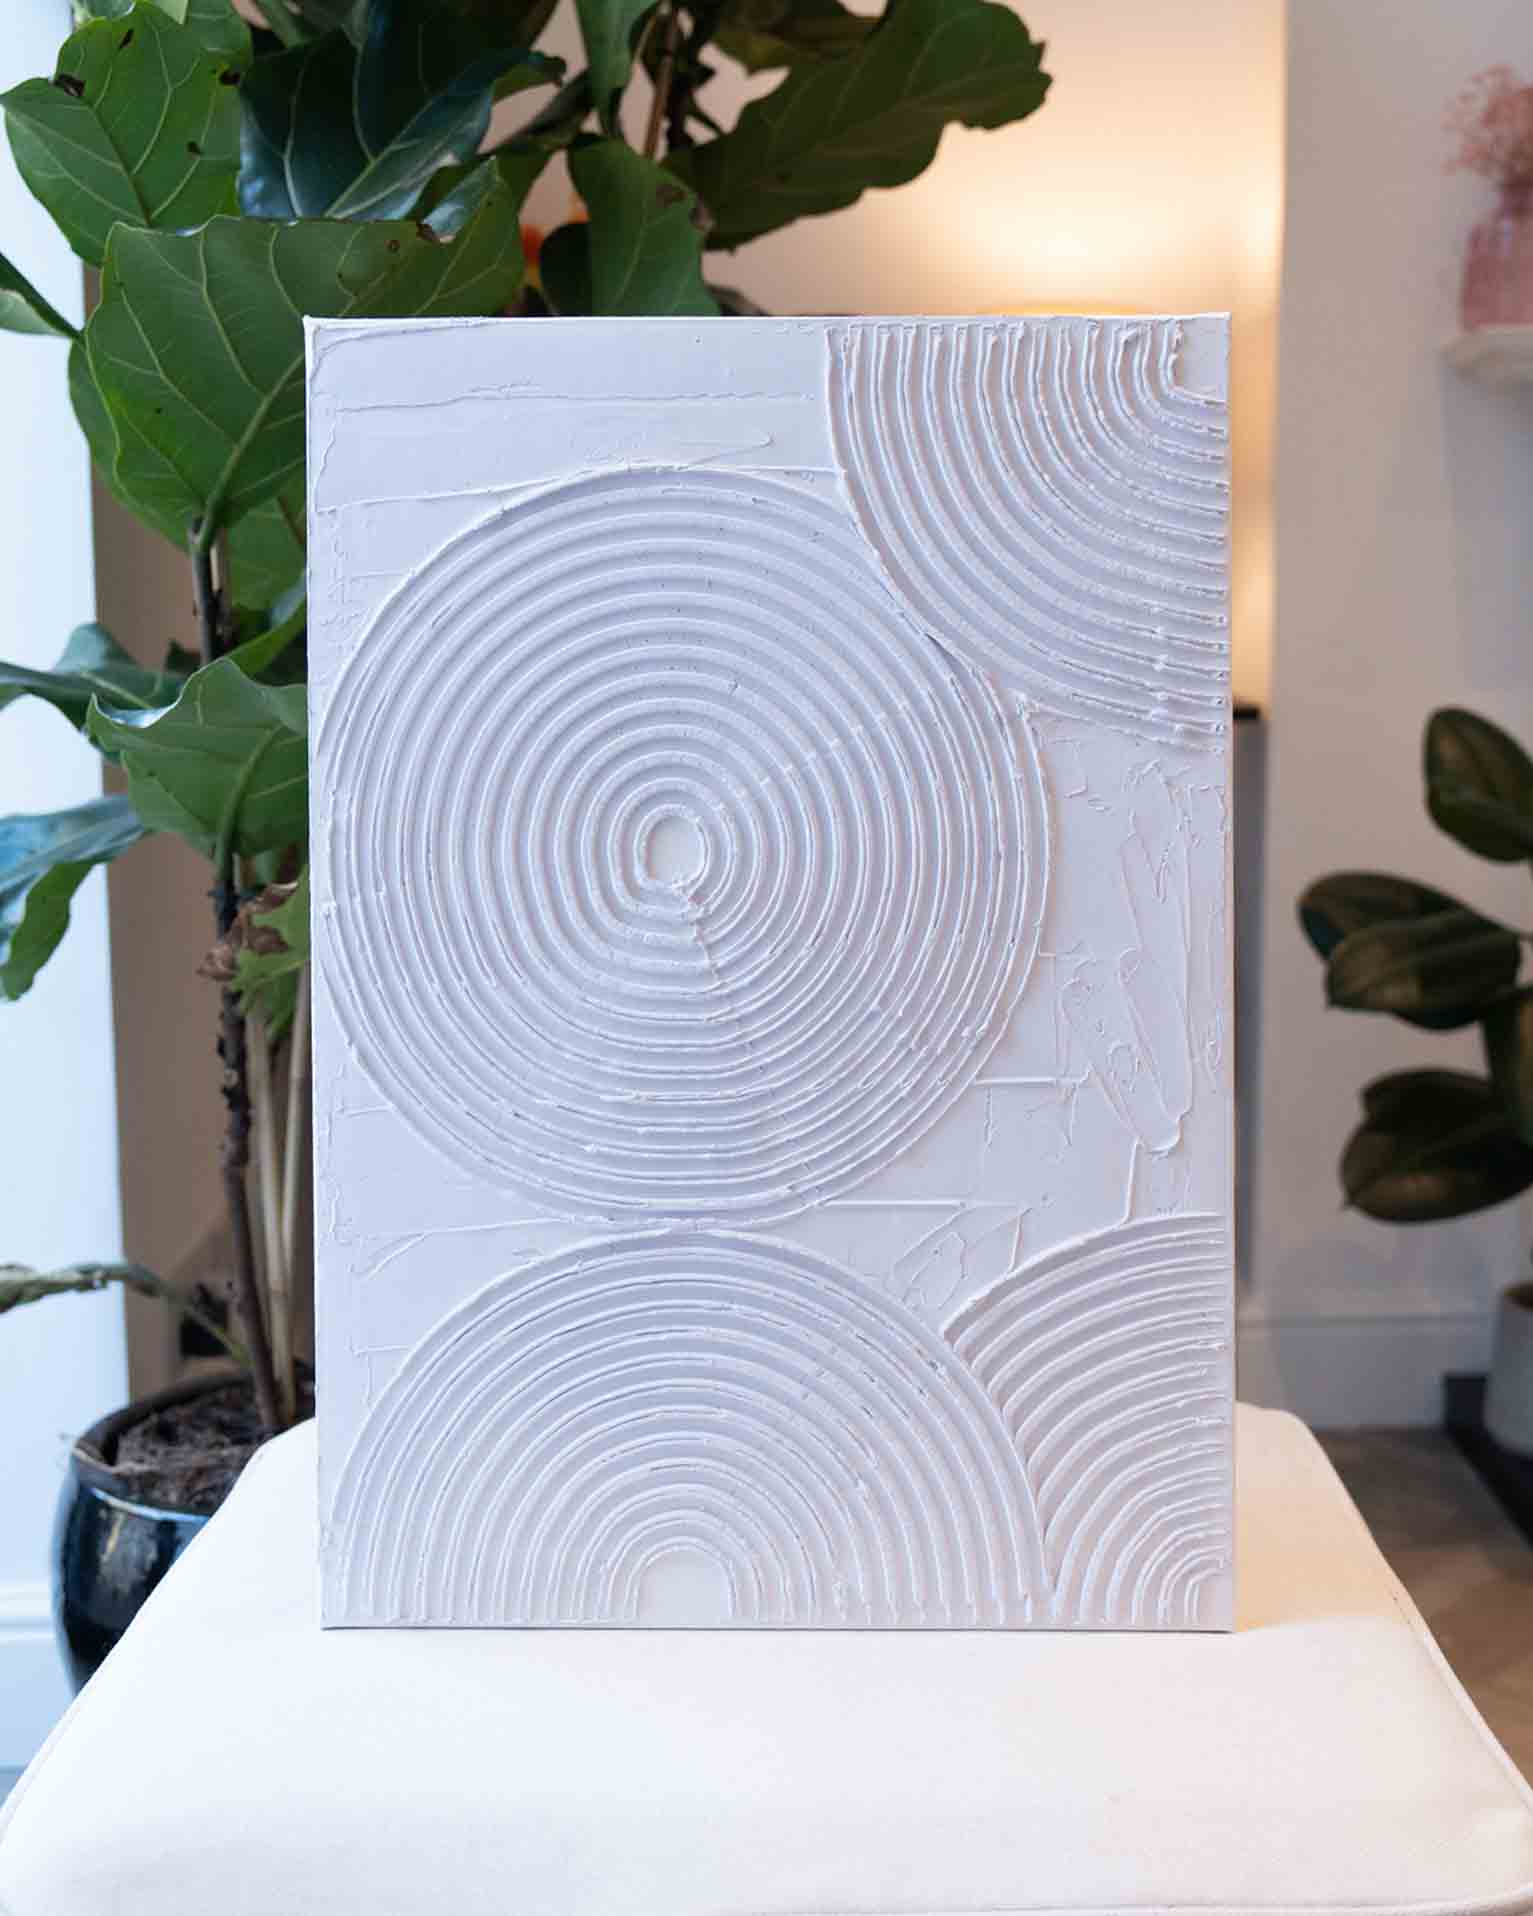 DIY Textured Art Kit – YOUR MODERN DESIGNS